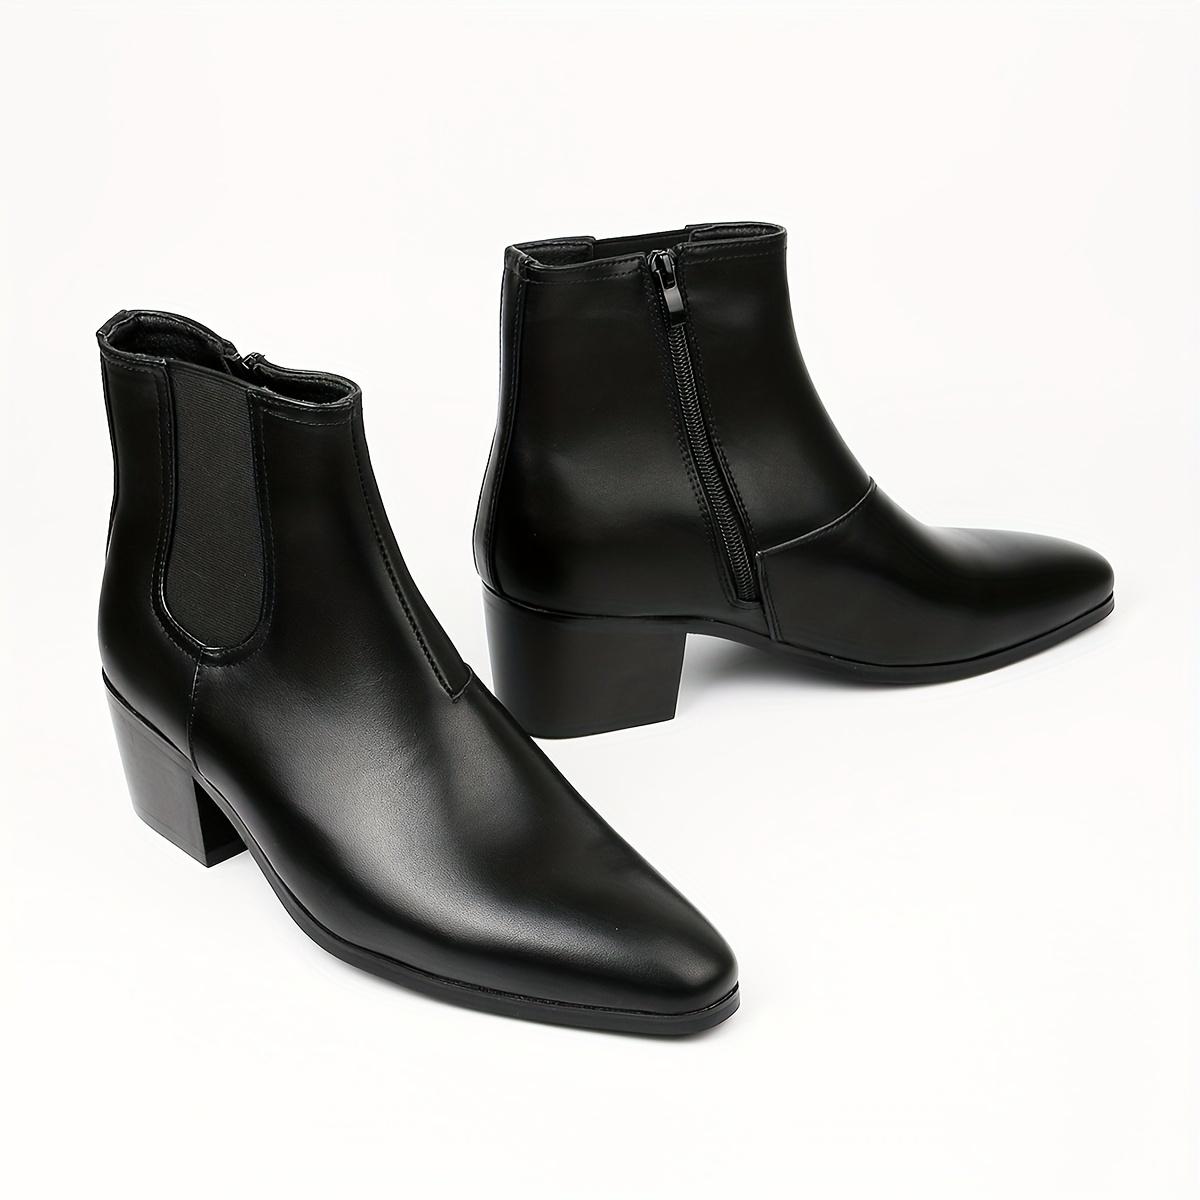 Men’s High Heel Solid Colour Zip Up Chelsea Boots, Comfy Non Slip Rubber Sole Durable Shoes For Men’s Outdoor Activities